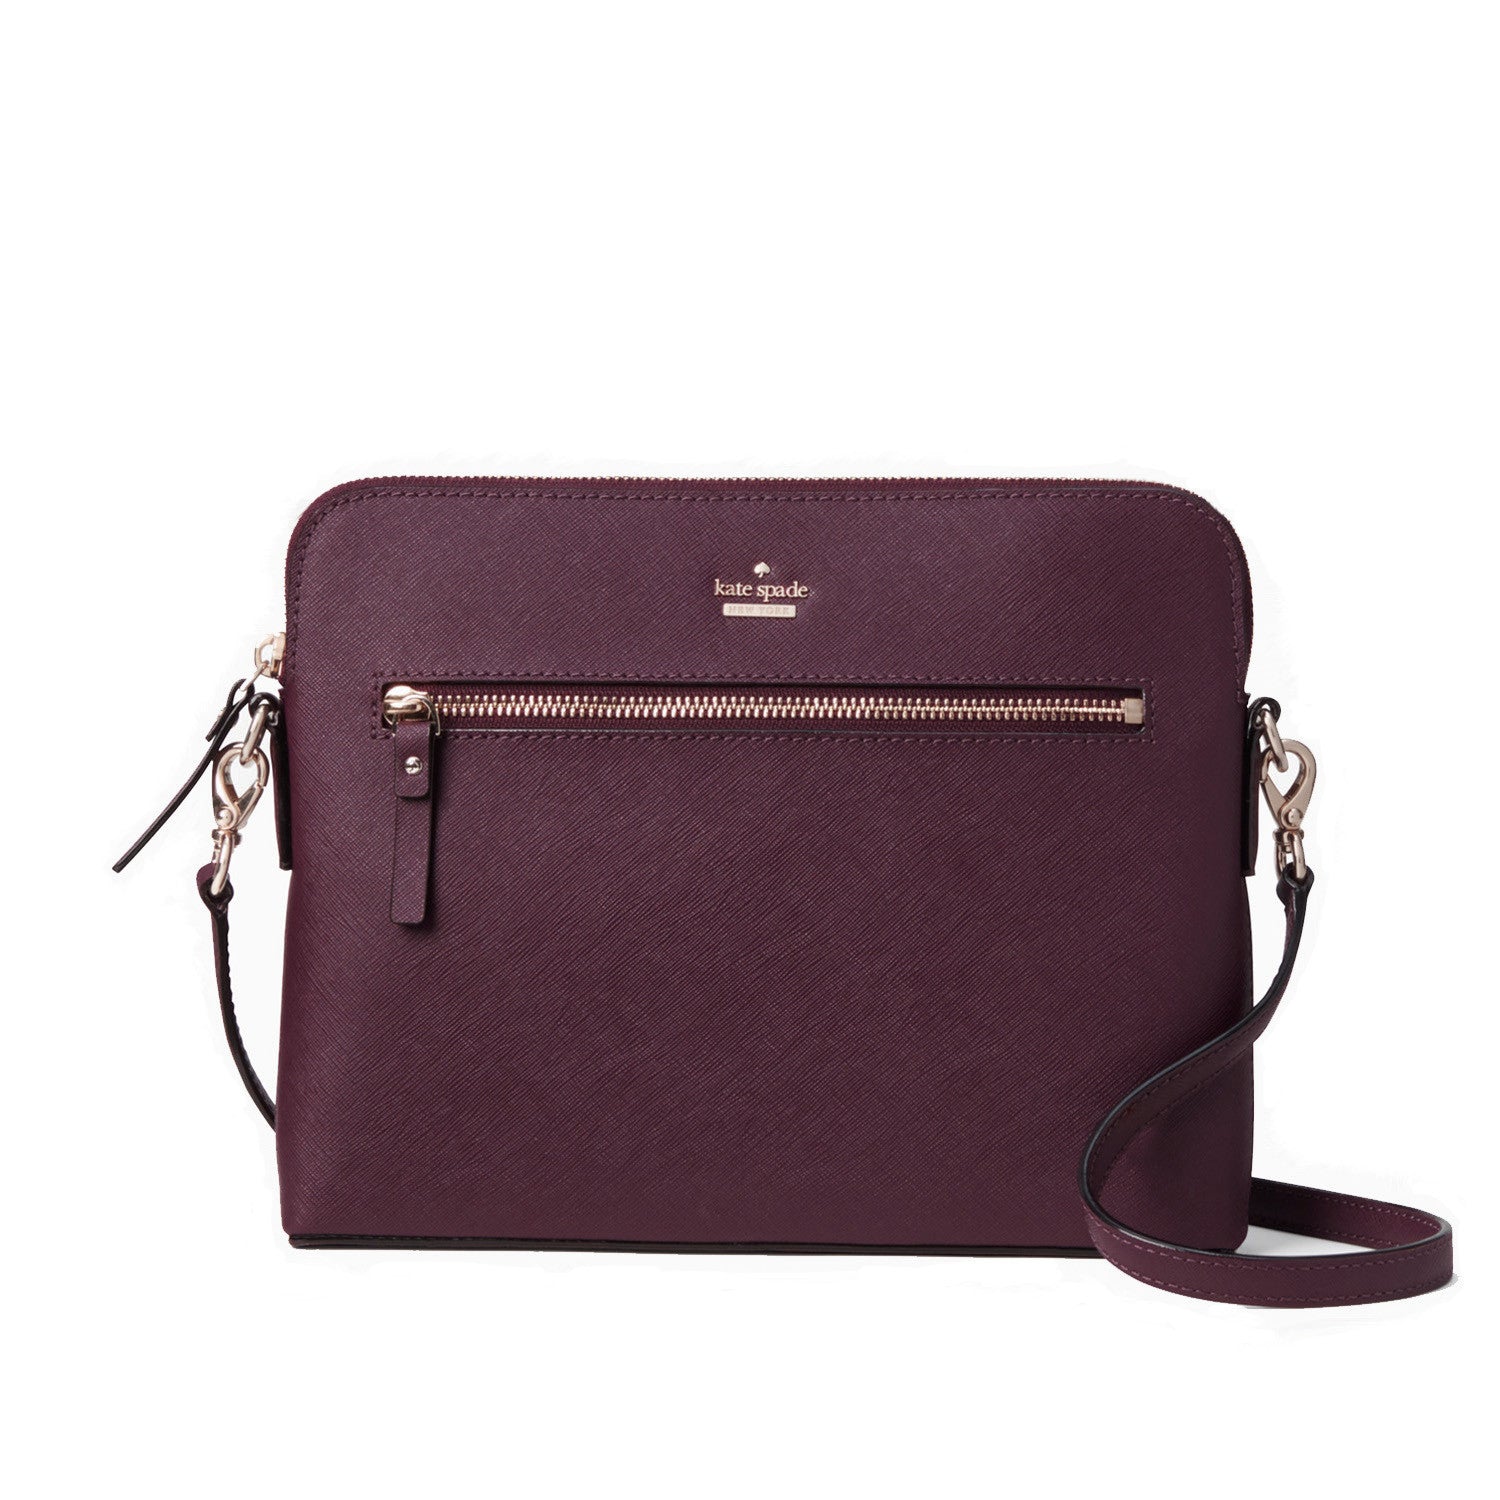 KATE SPADE Chelsea medium burgundy wine hang bag purse | eBay